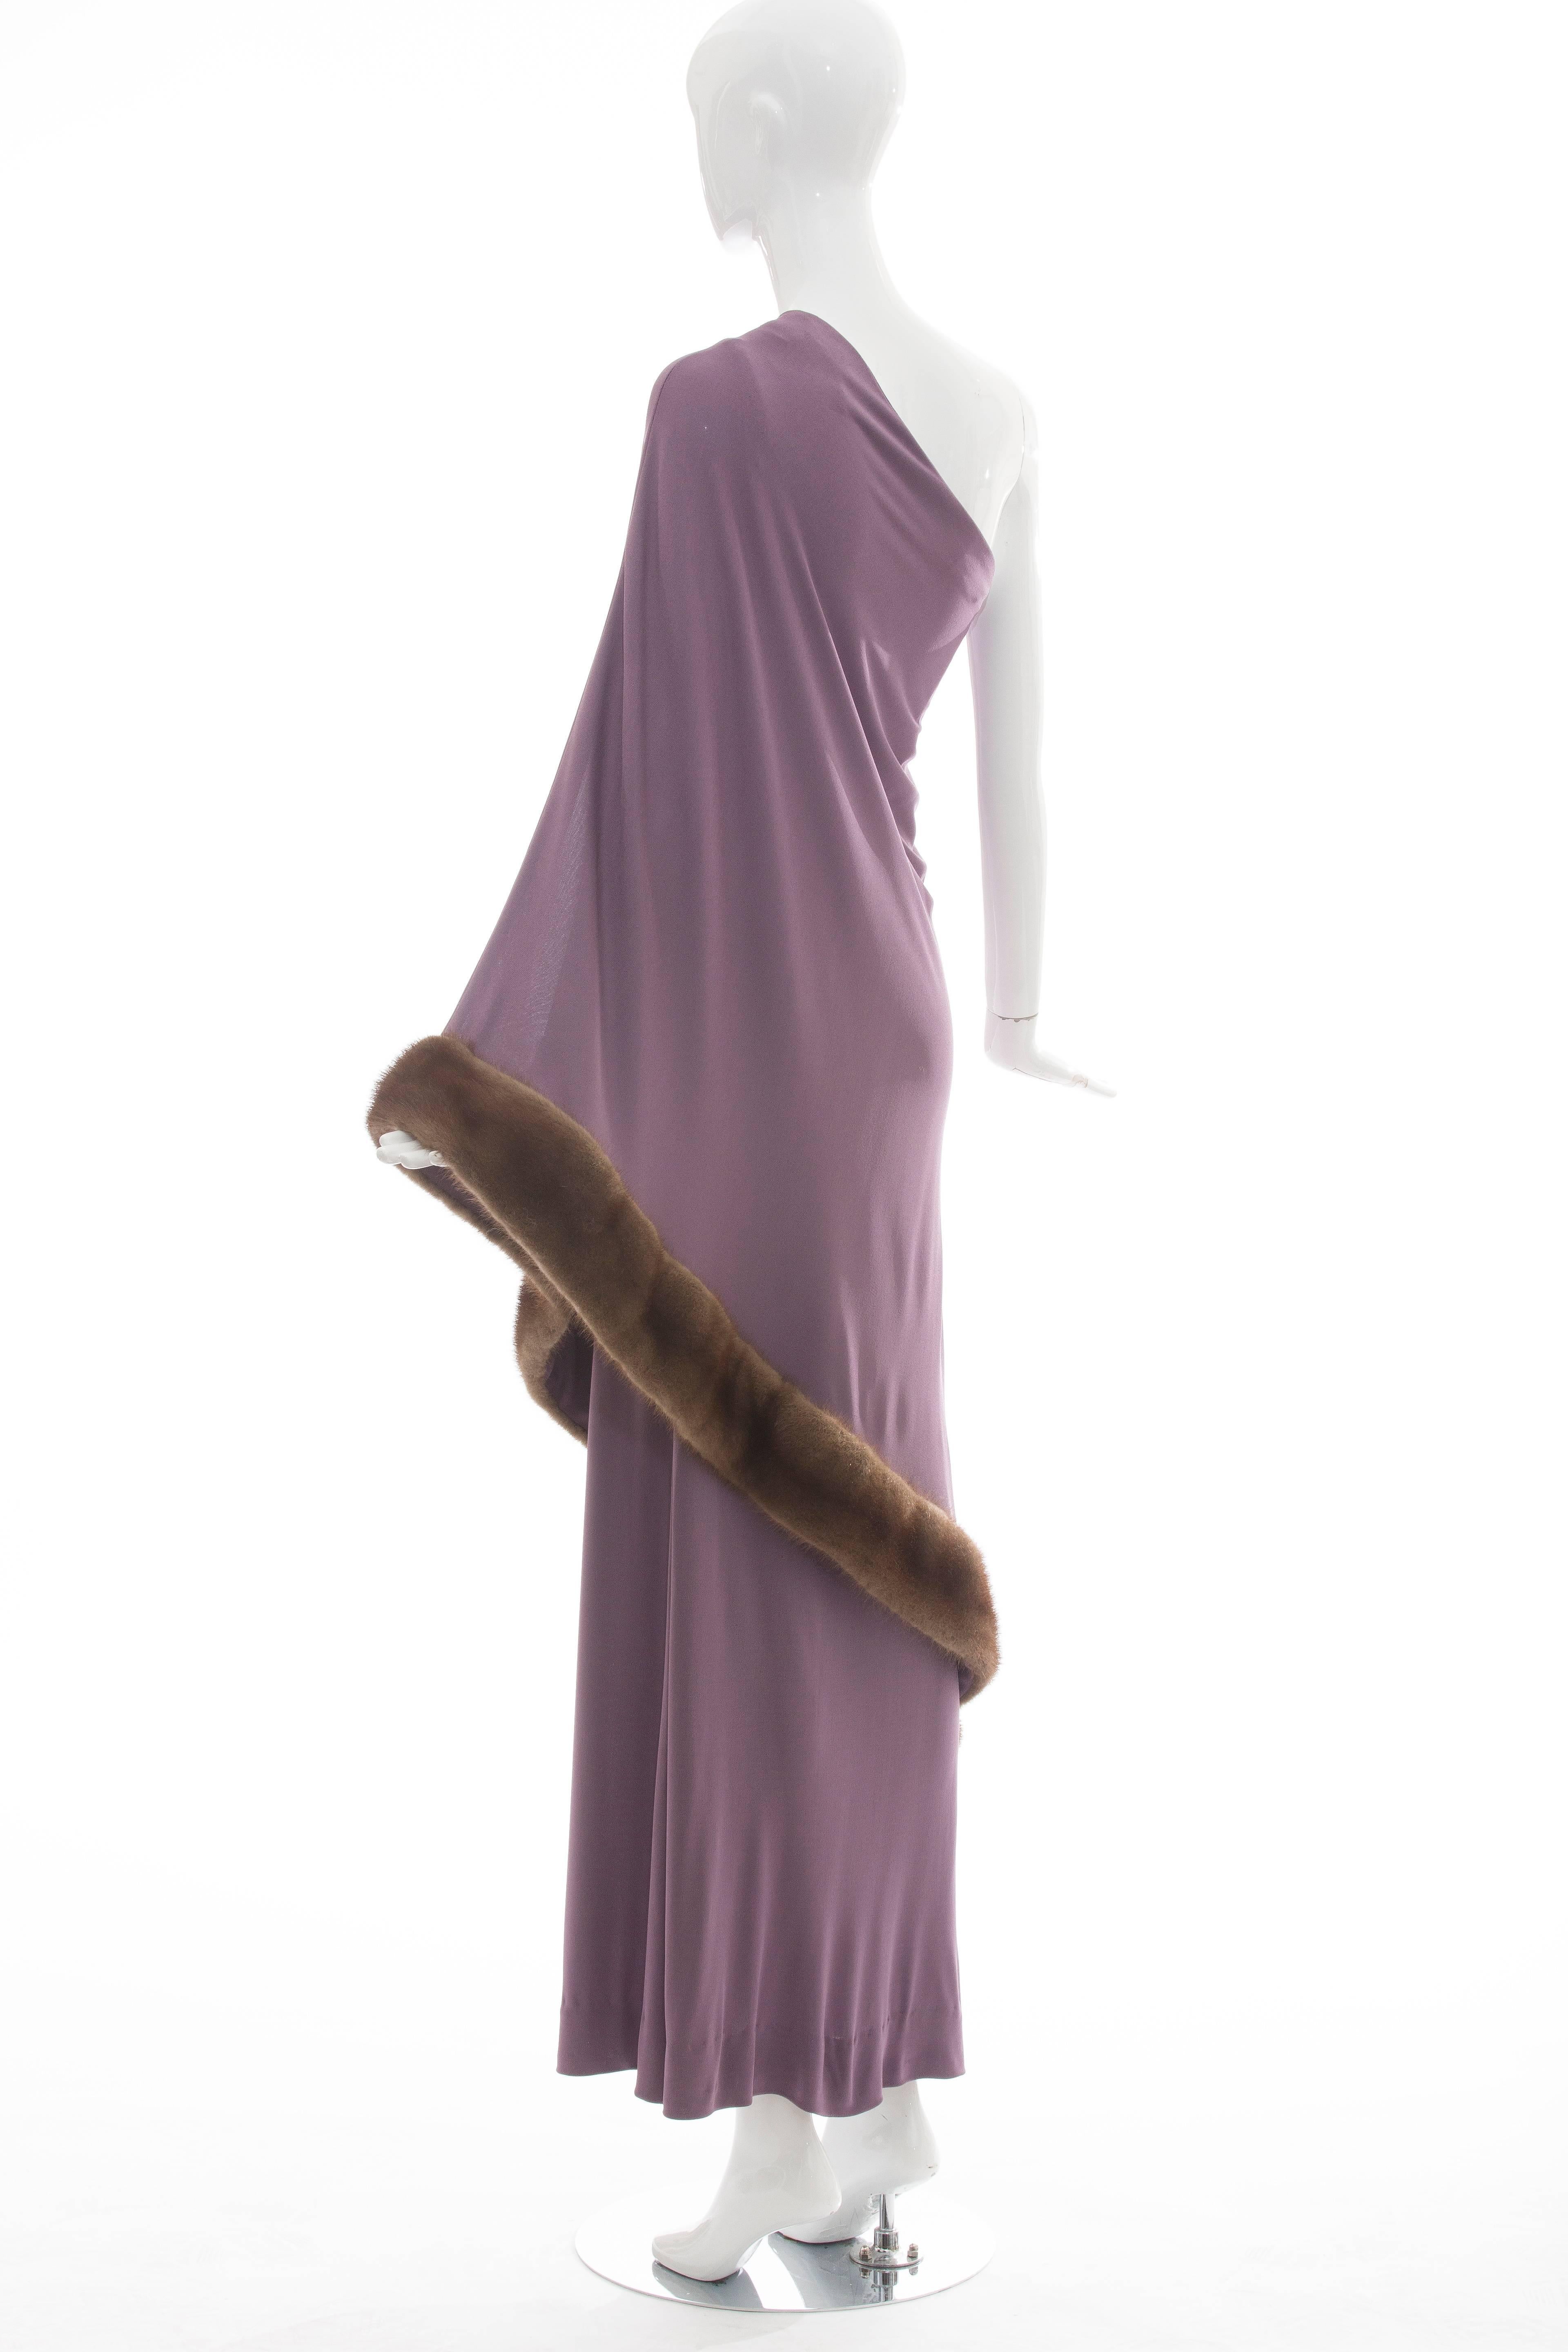 Bill Blass Violet Jersey One Shoulder Evening Dress With Mink Trim, Circa 1970's 2